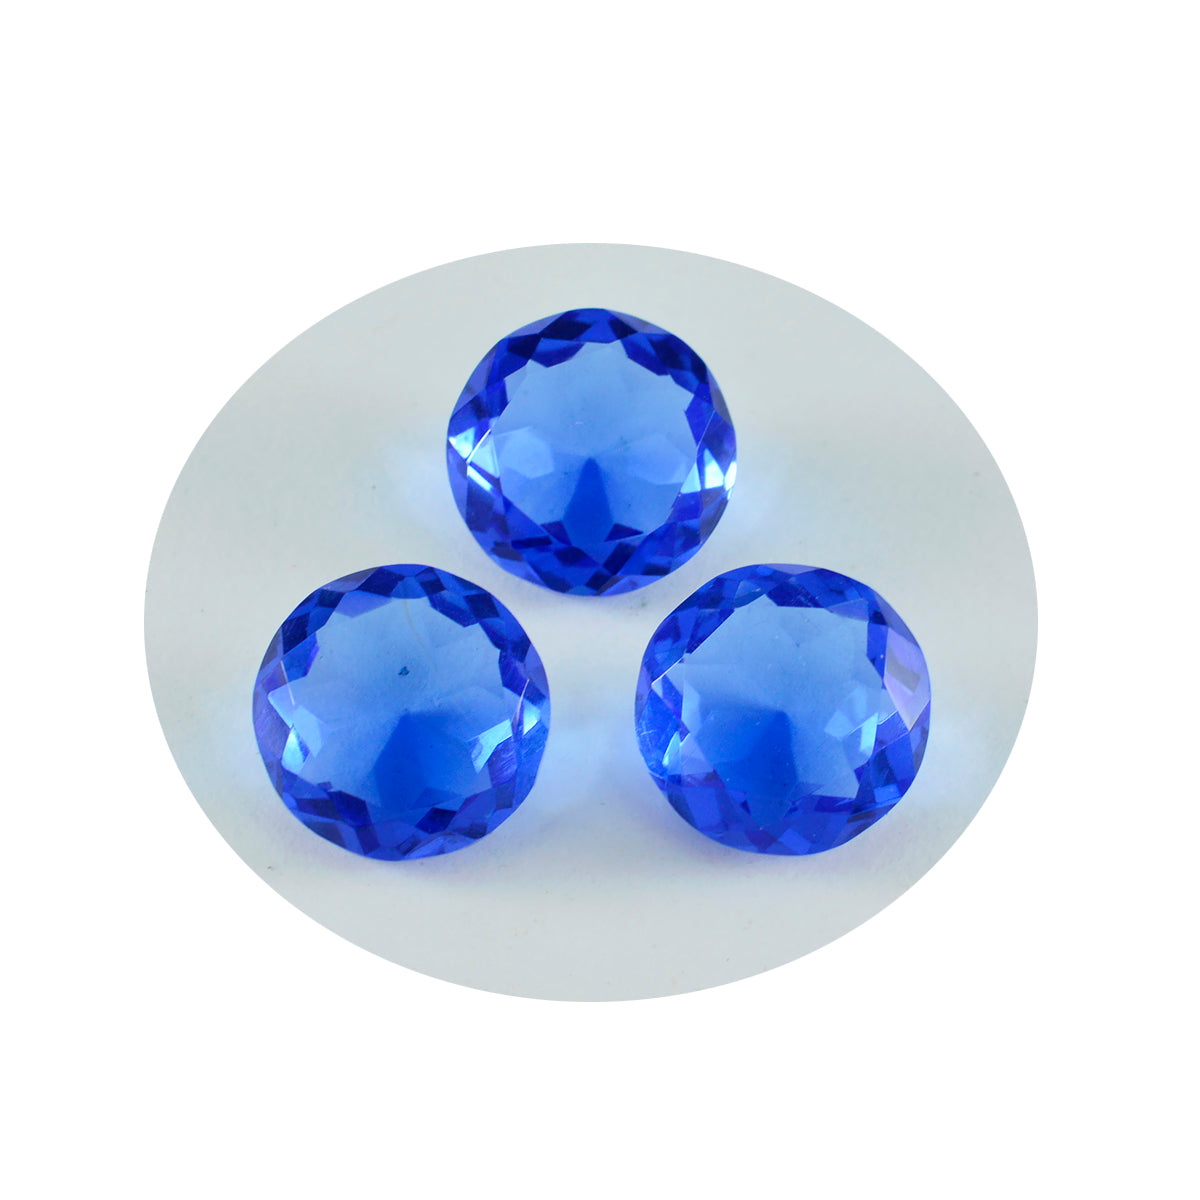 Riyogems 1PC Blue Sapphire CZ Faceted 14x14 mm Round Shape AAA Quality Gemstone